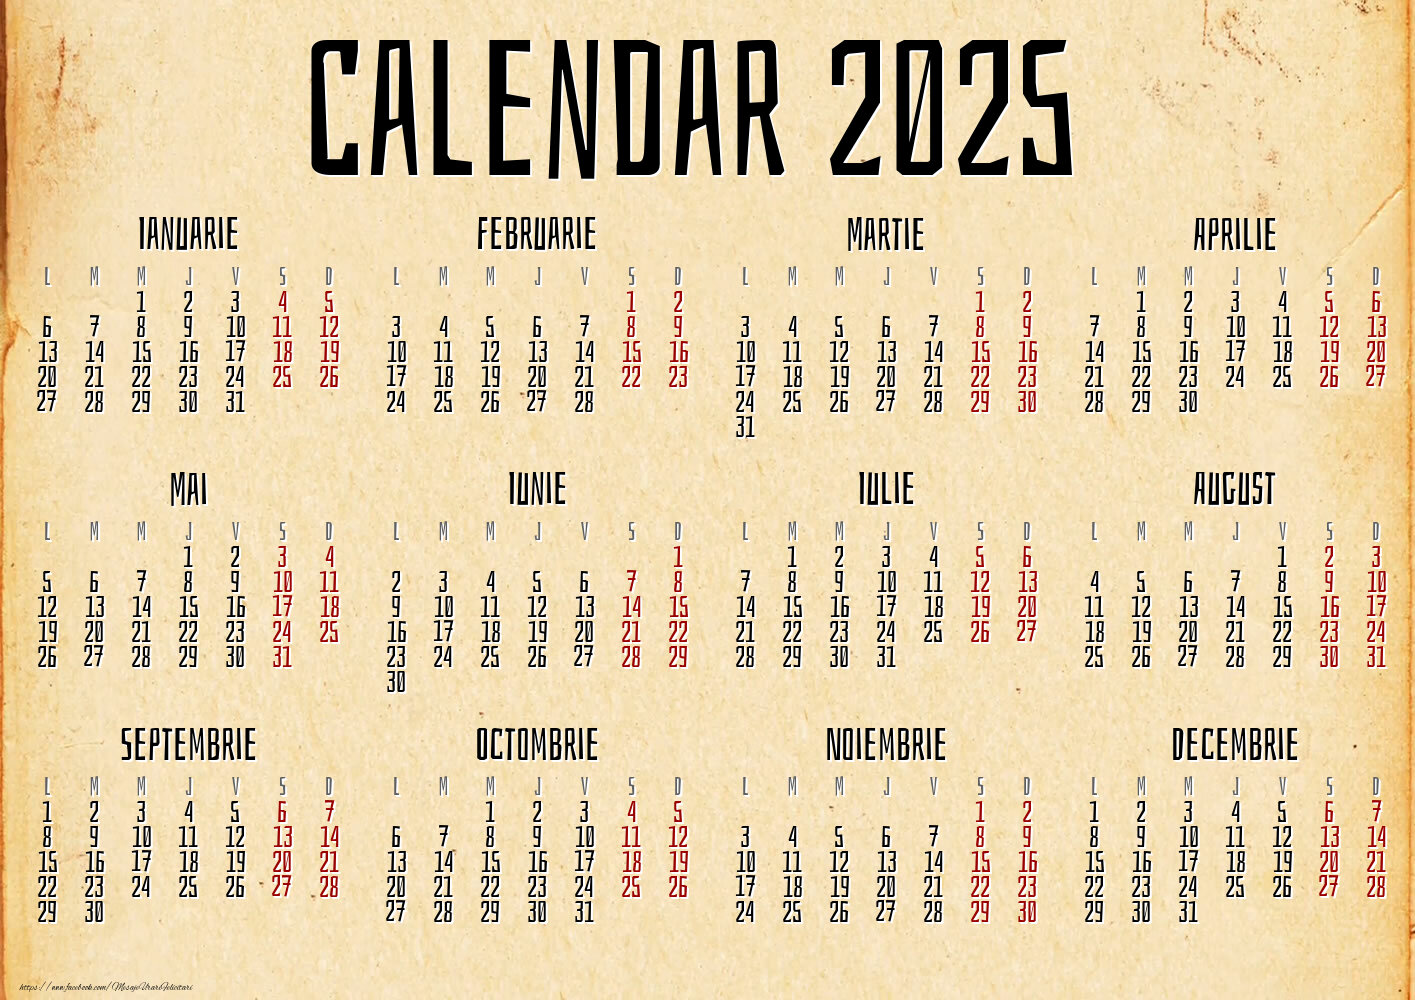 Imagini cu calendare - Calendar 2025 - Vintage Paper - Model 0048 - mesajeurarifelicitari.com